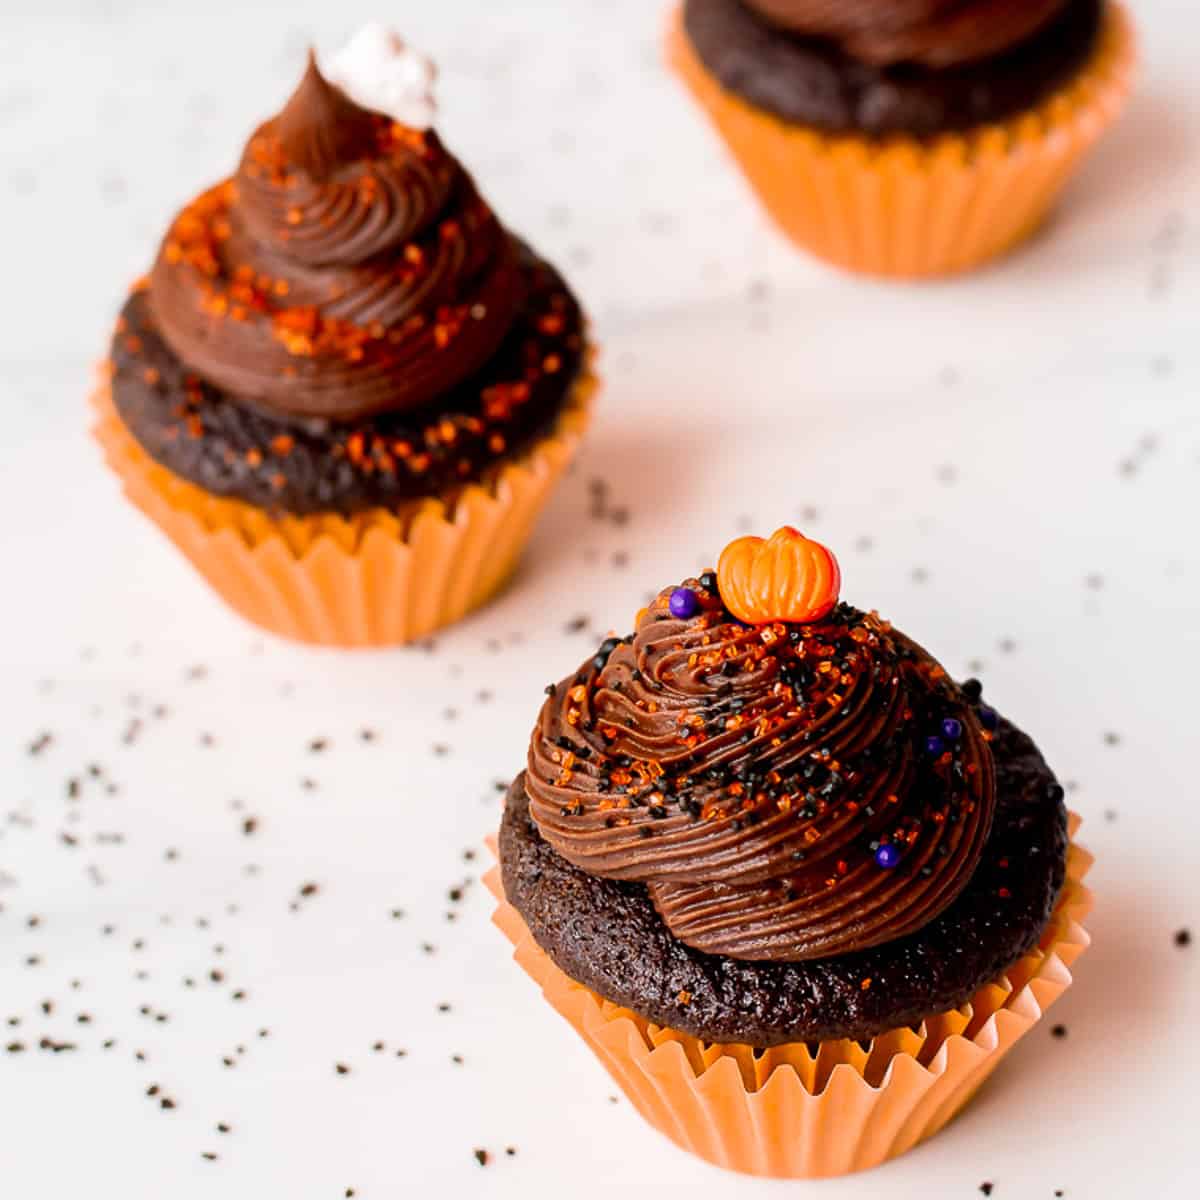 https://deliciouslittlebites.com/wp-content/uploads/2020/08/Mini-Chocolate-Cupcakes-Recipe-Image-1-3.jpg